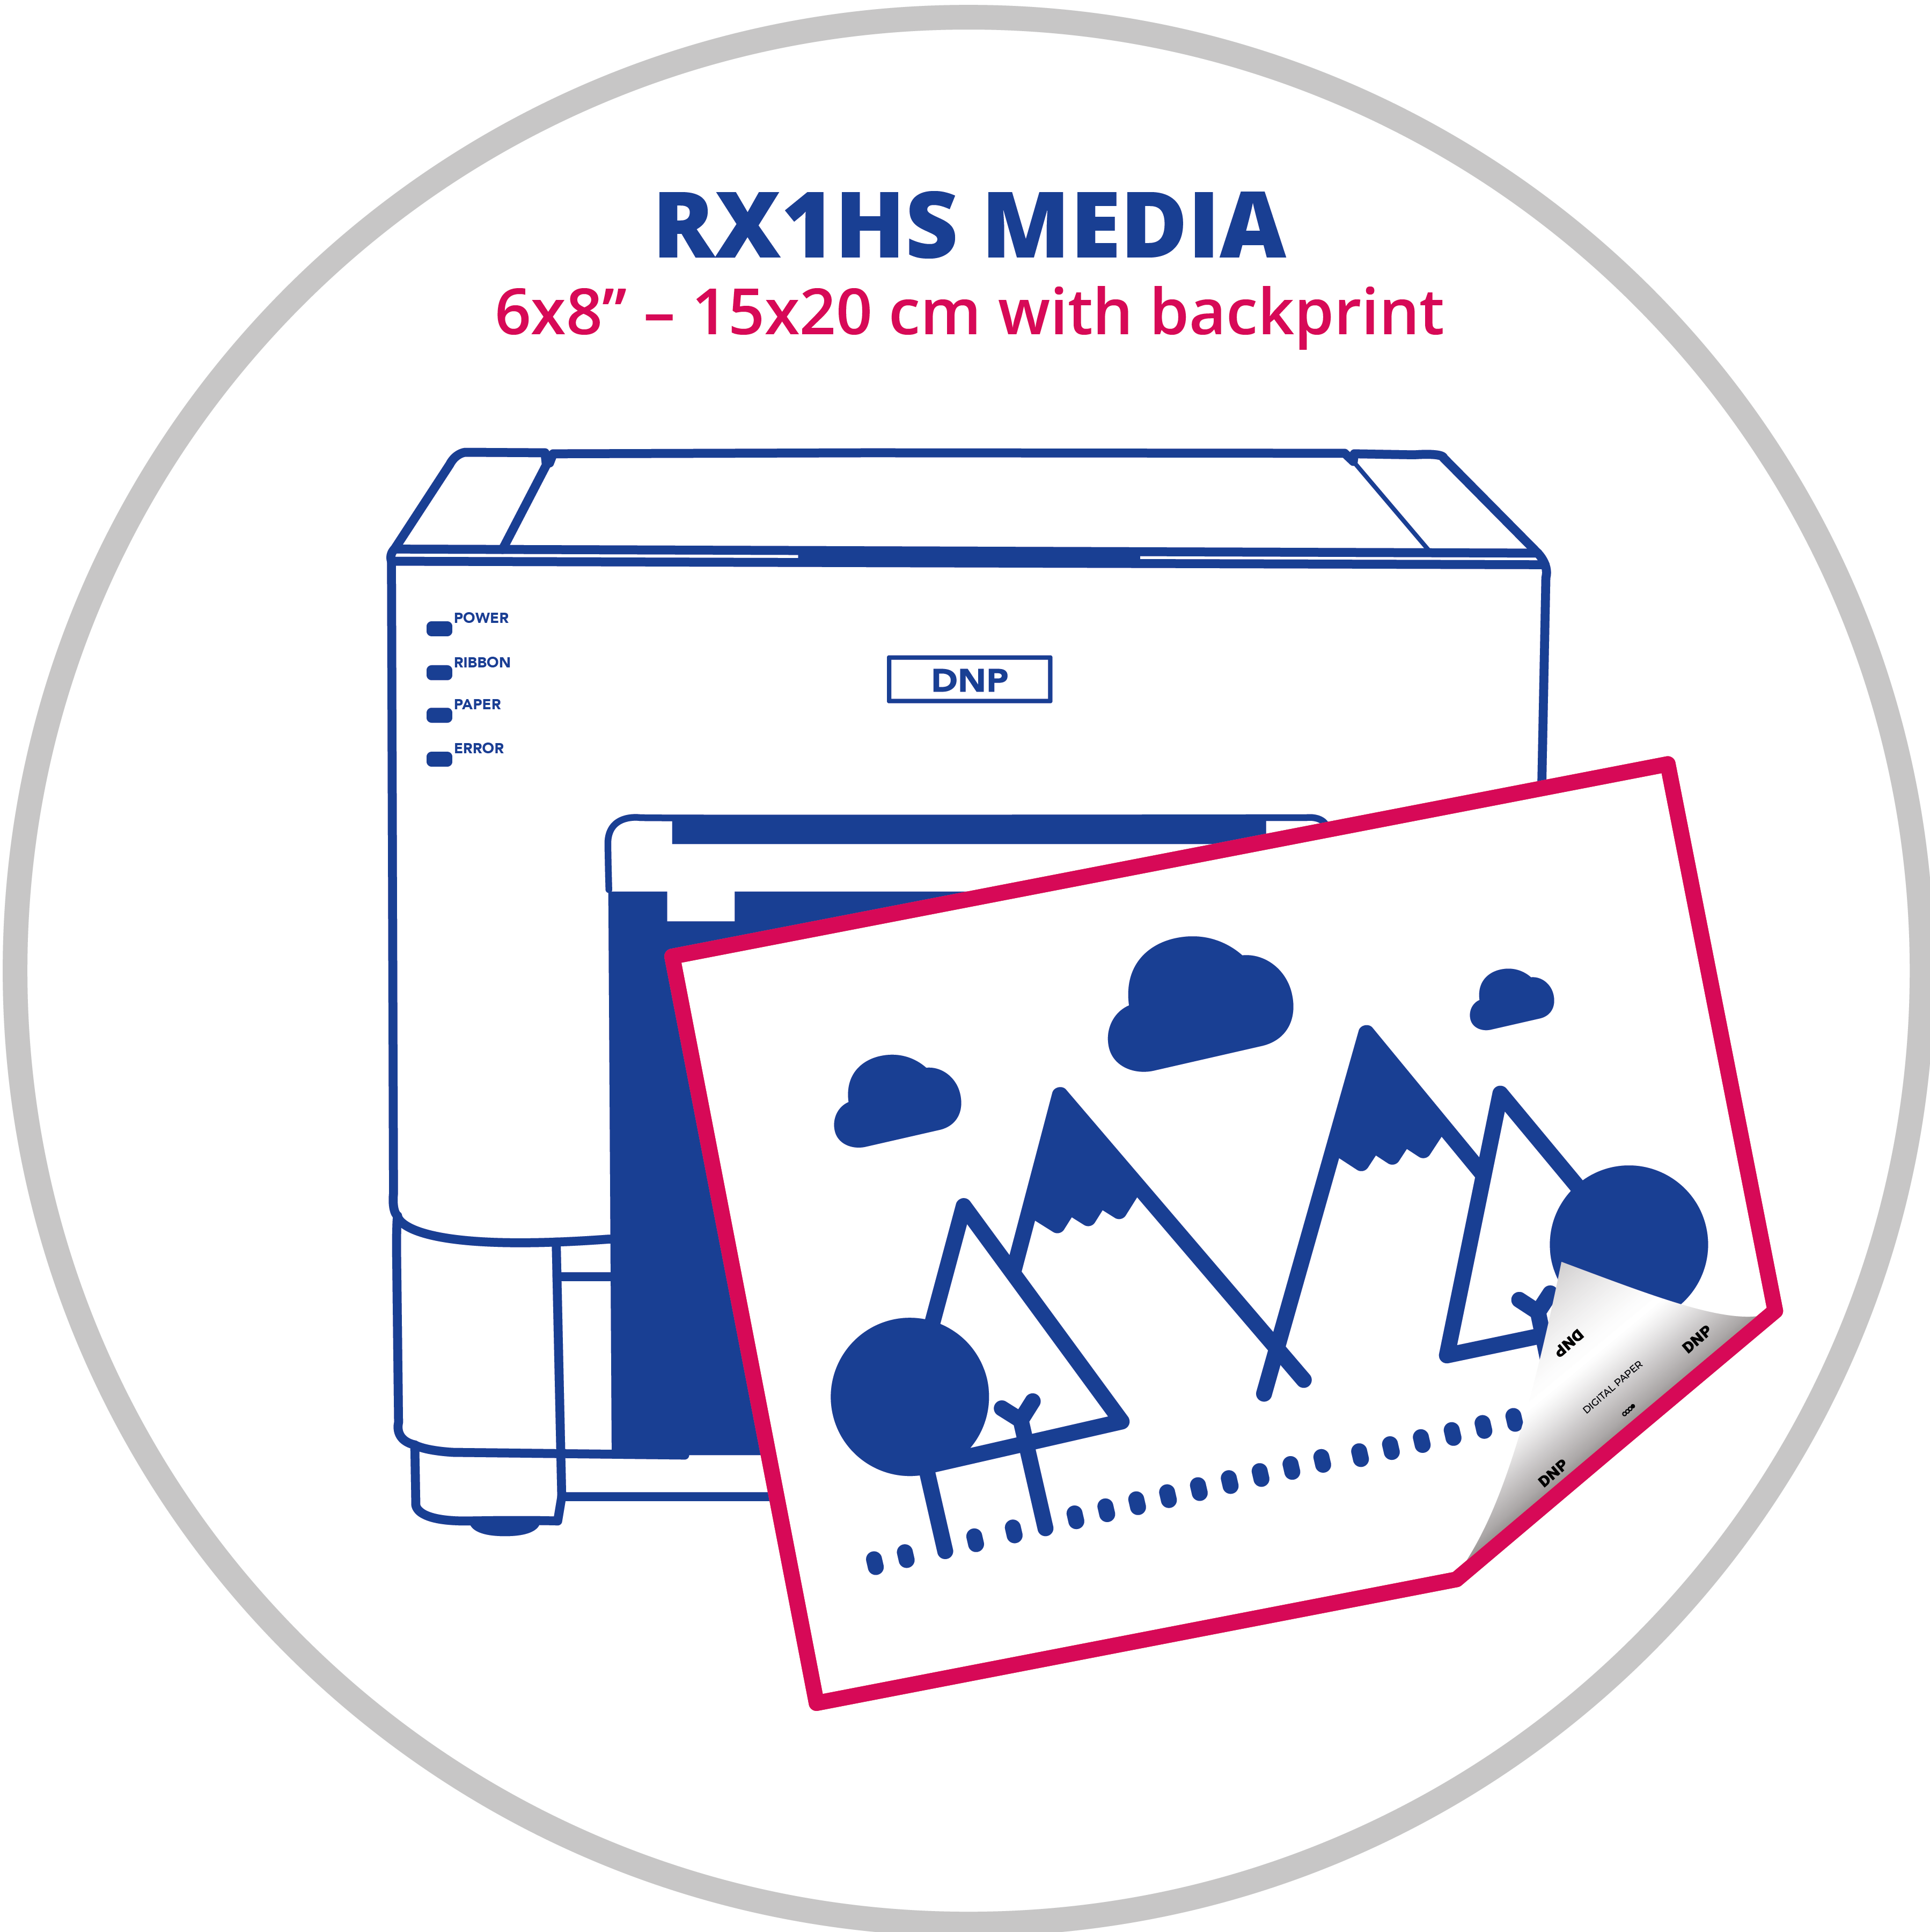 RX1HS 6X8 - 15X20 with backprint